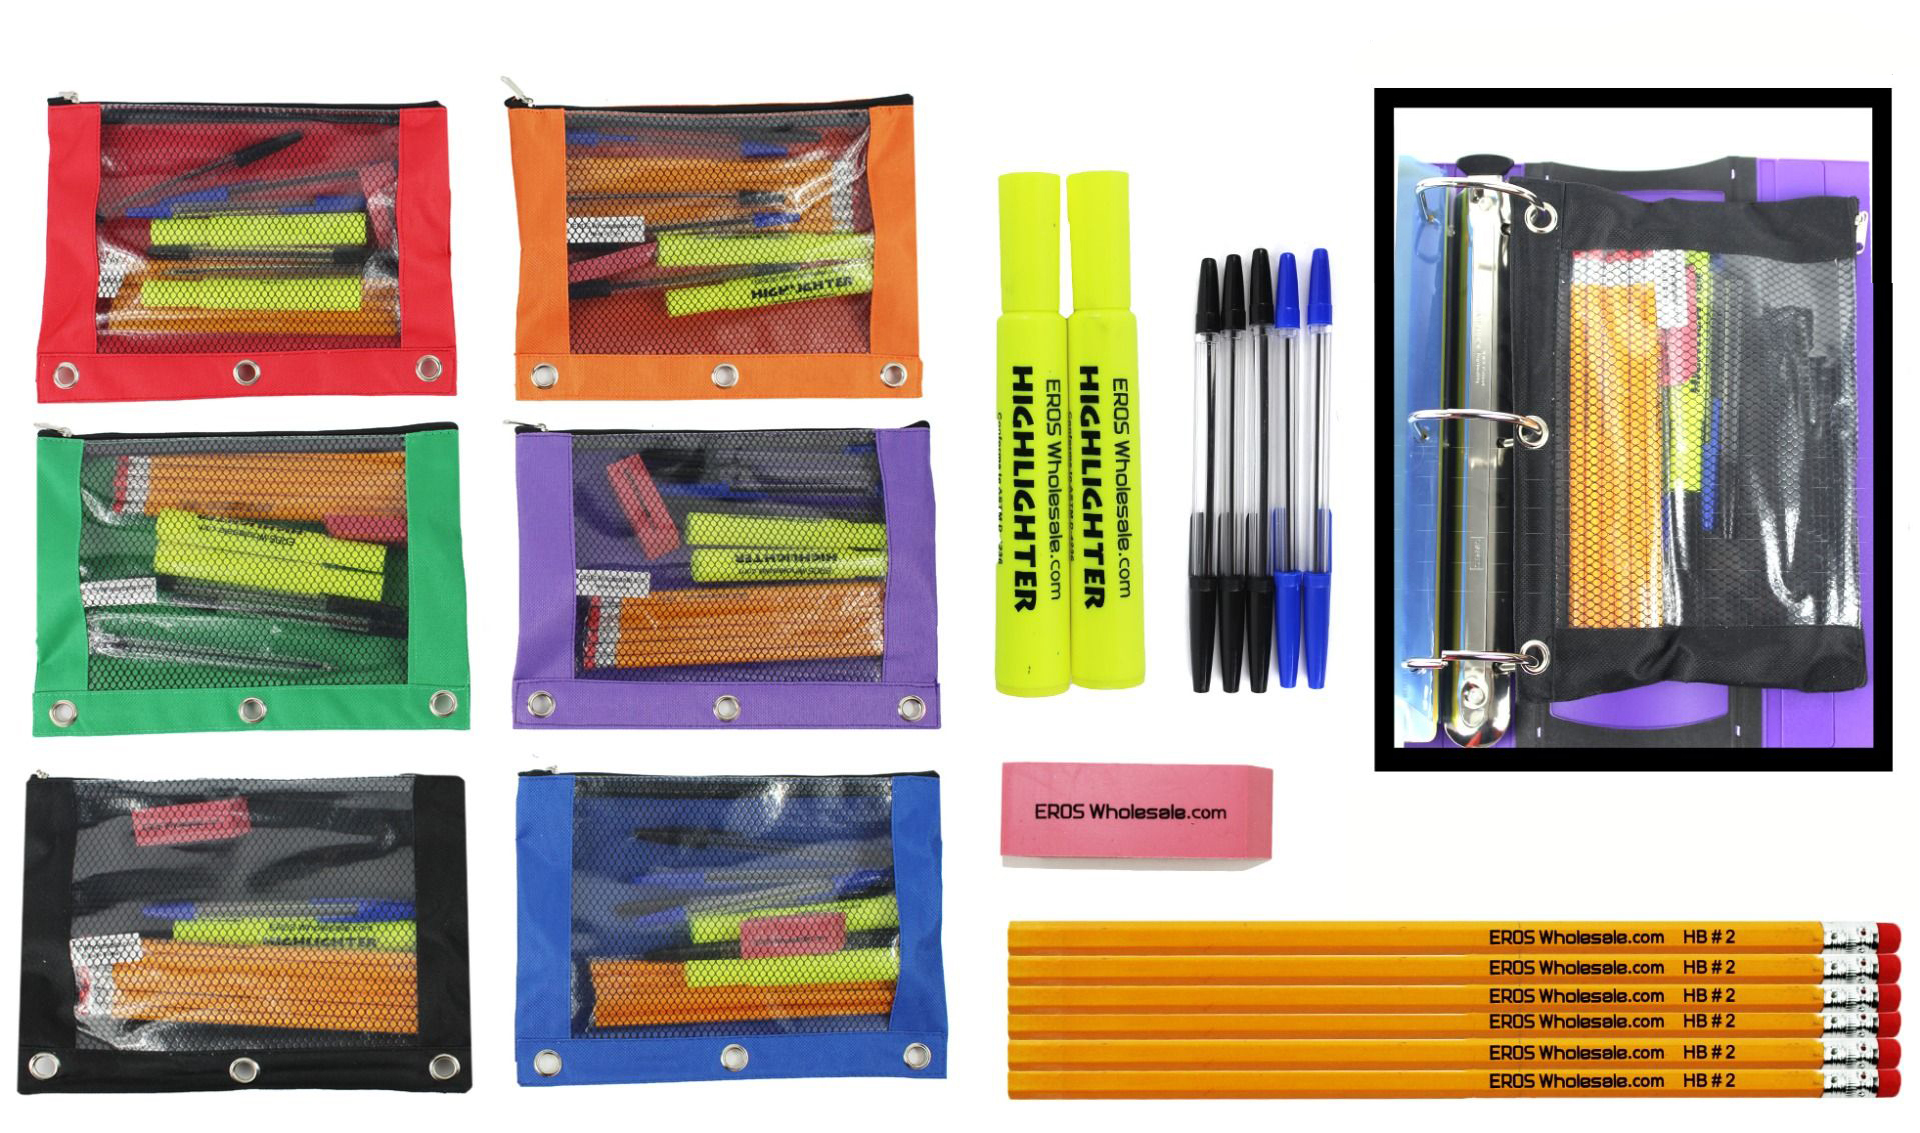 Basic High School Supply Kits